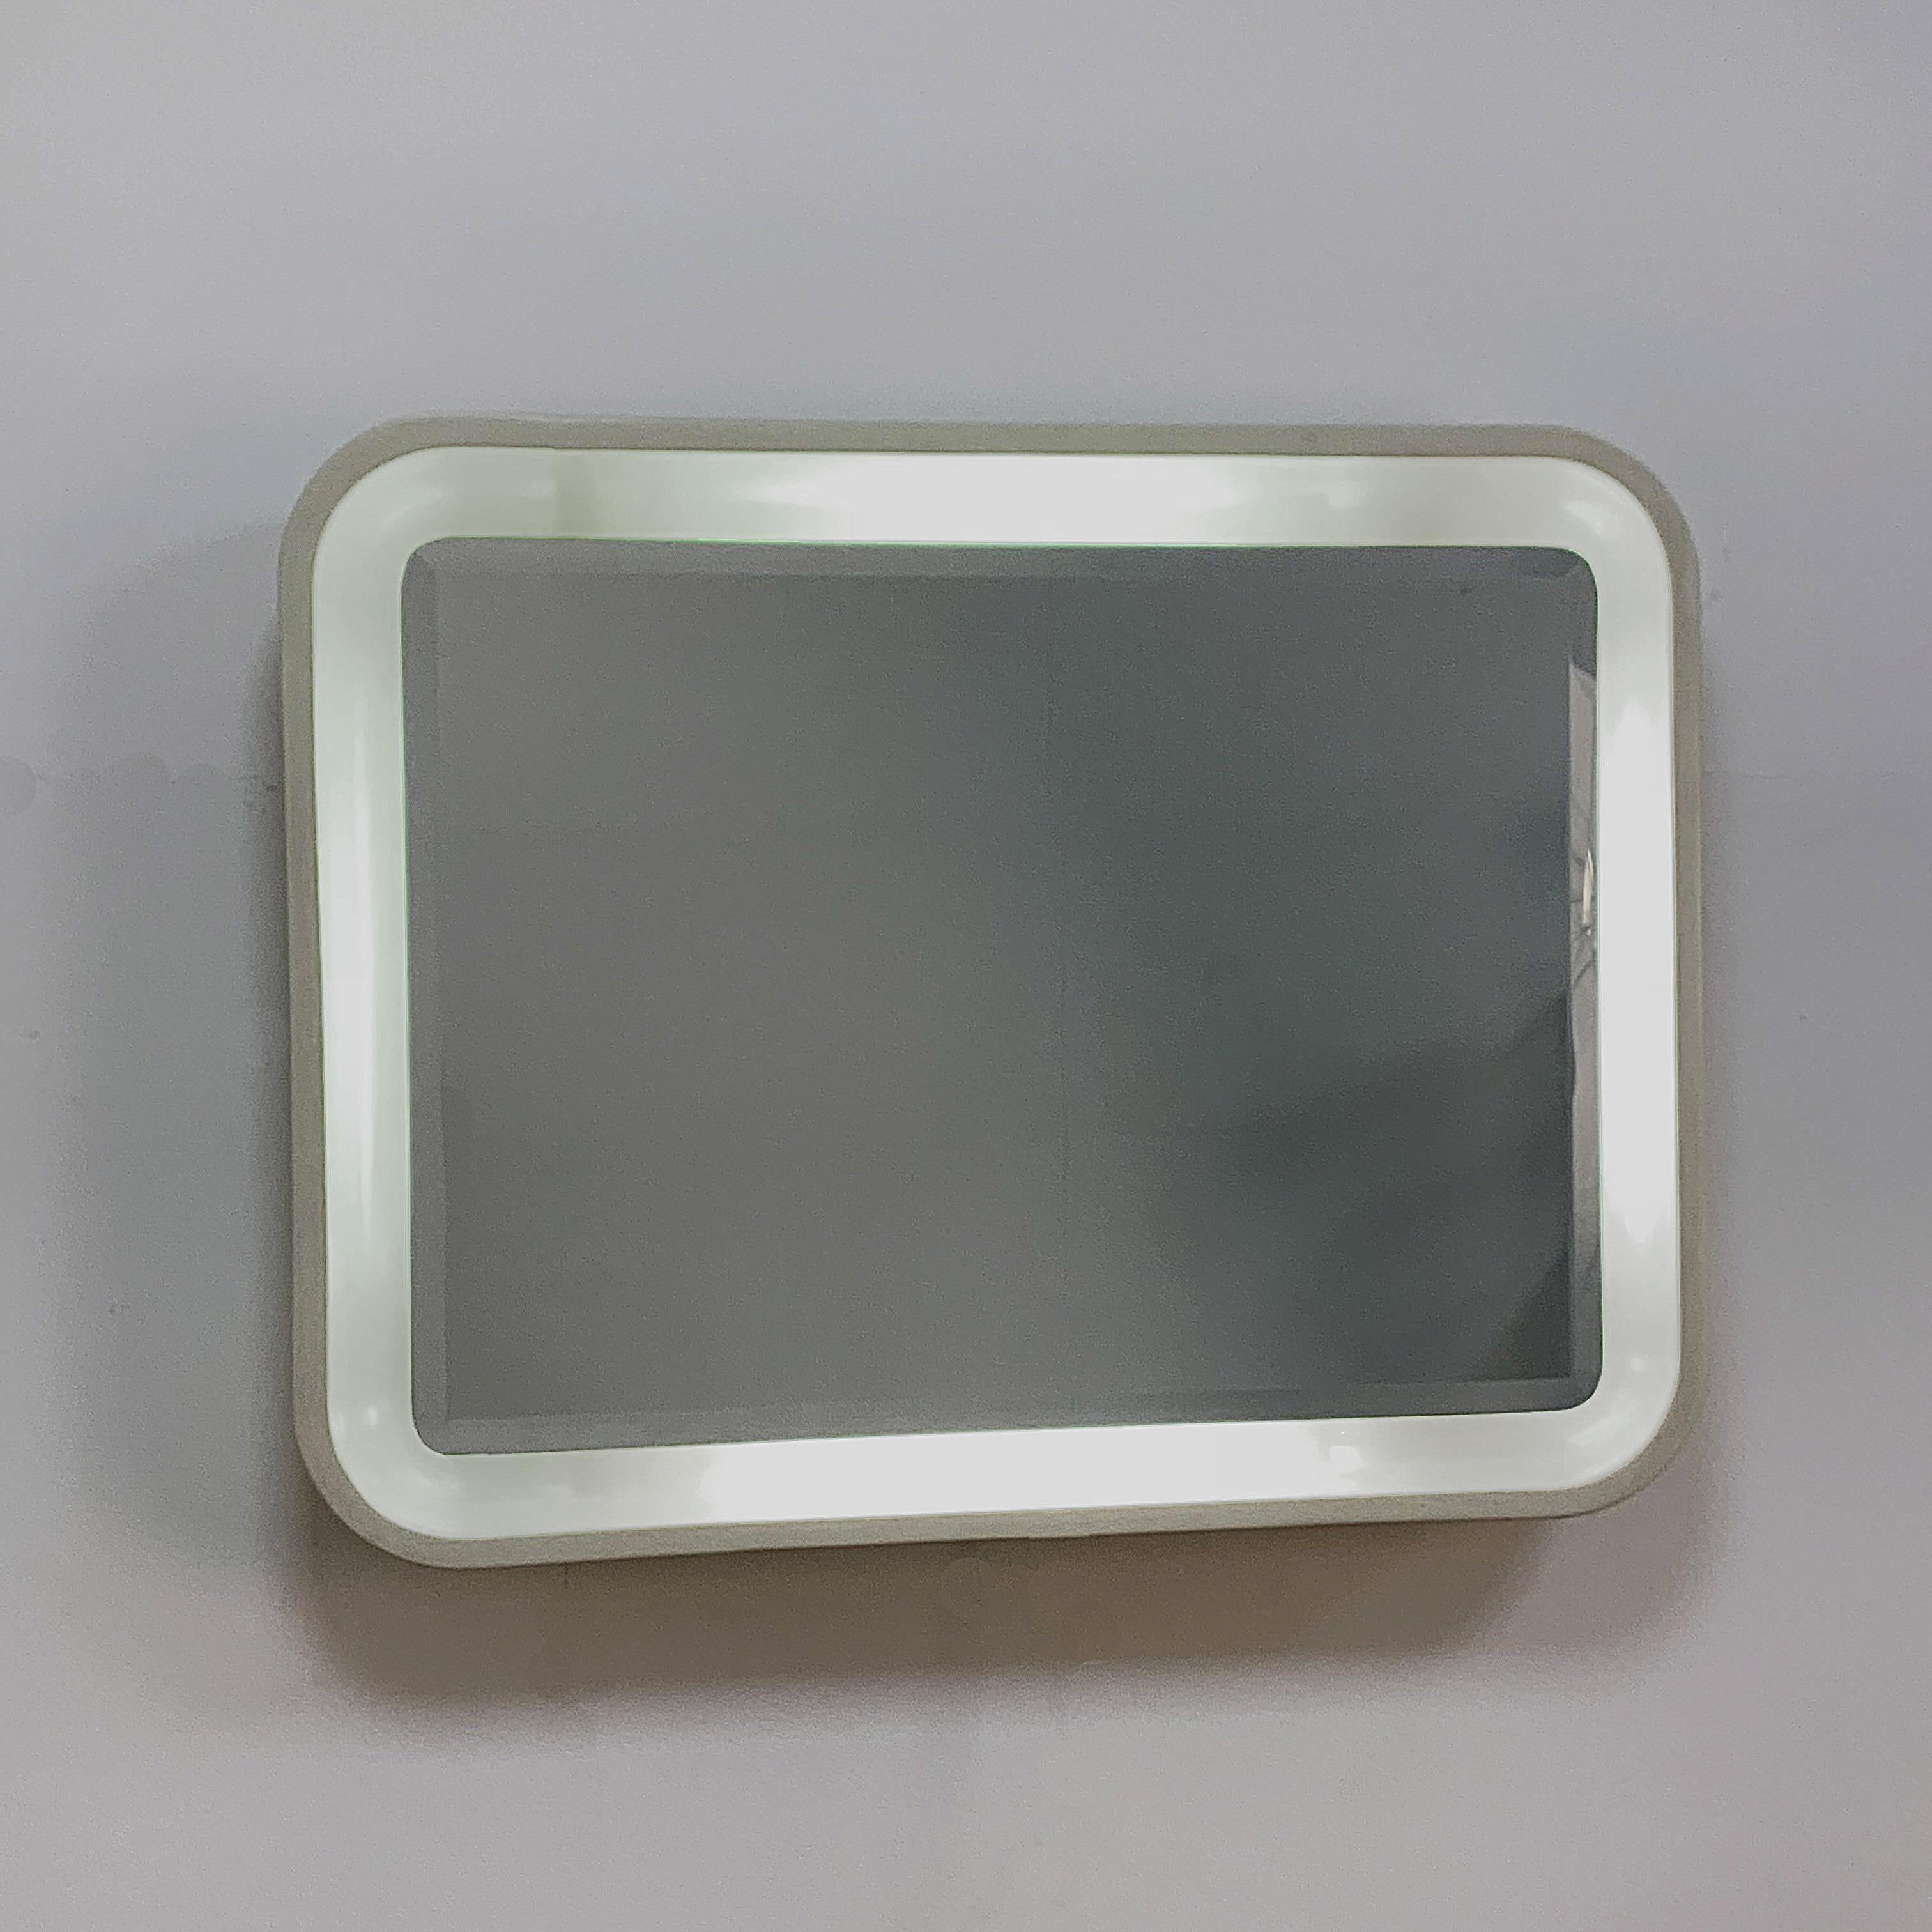 Lacquered Italian Illuminated Backlit Rectangular Mirror, White, Italy, 1970s Midcentury